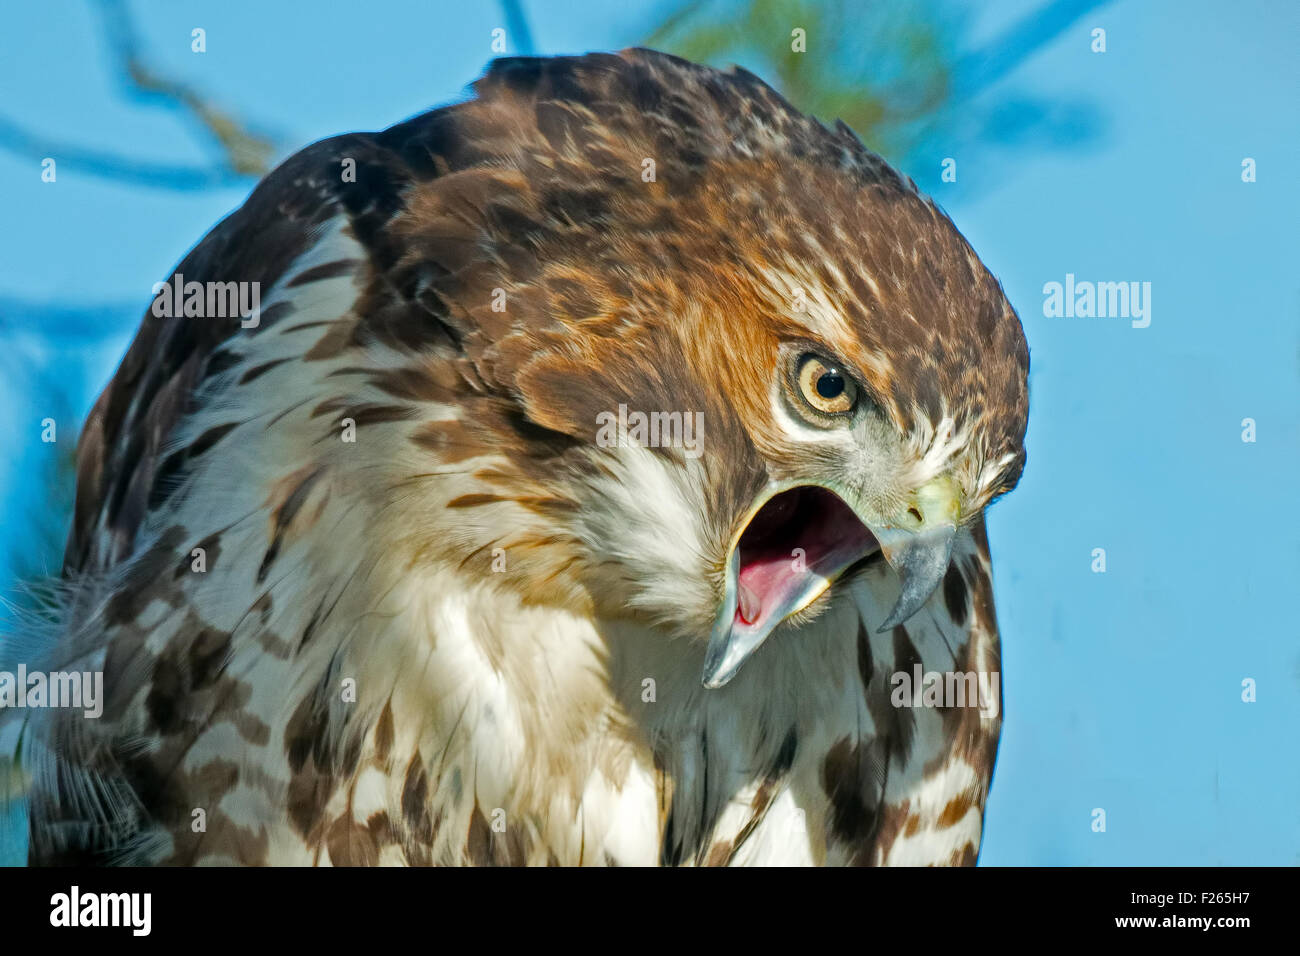 hawk sounds northern california